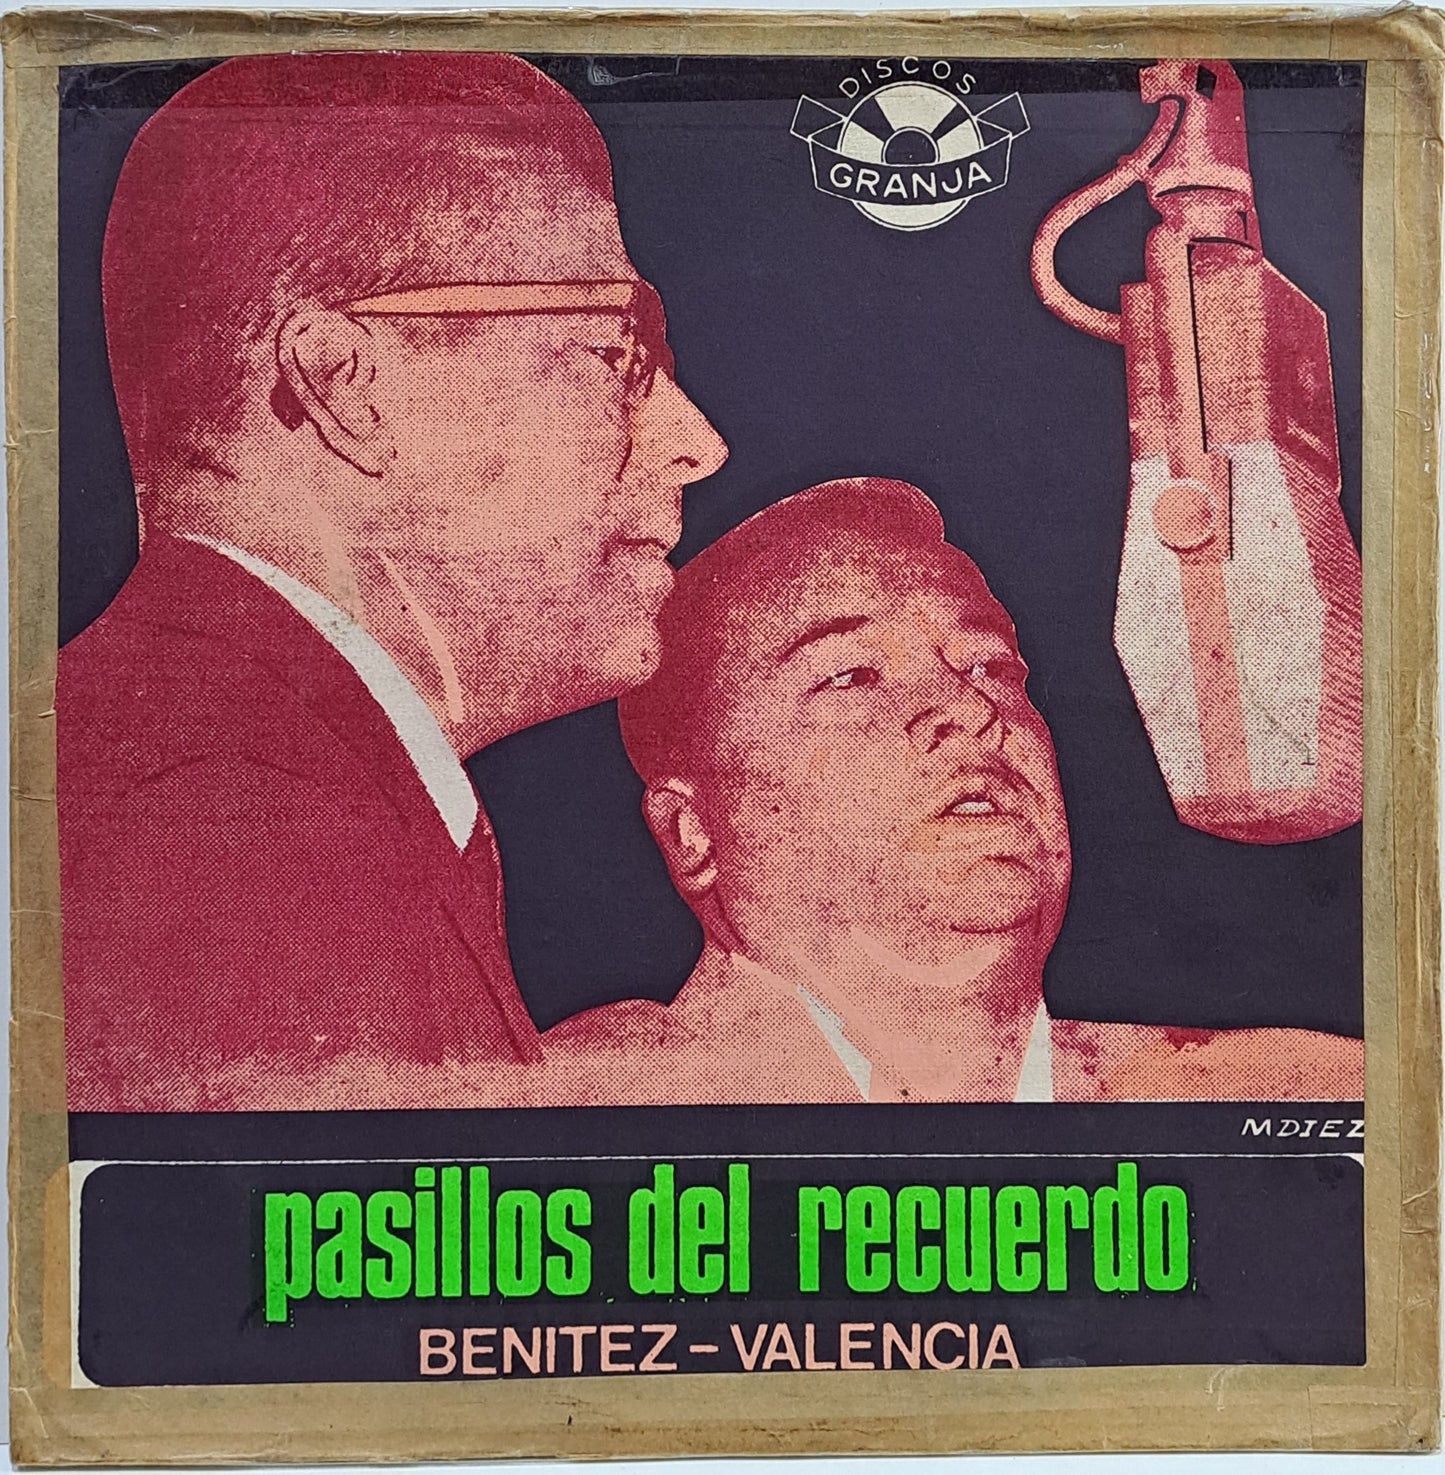 BENITEZ- VALENCIA - PASILLOS DEL RECUERDO LP